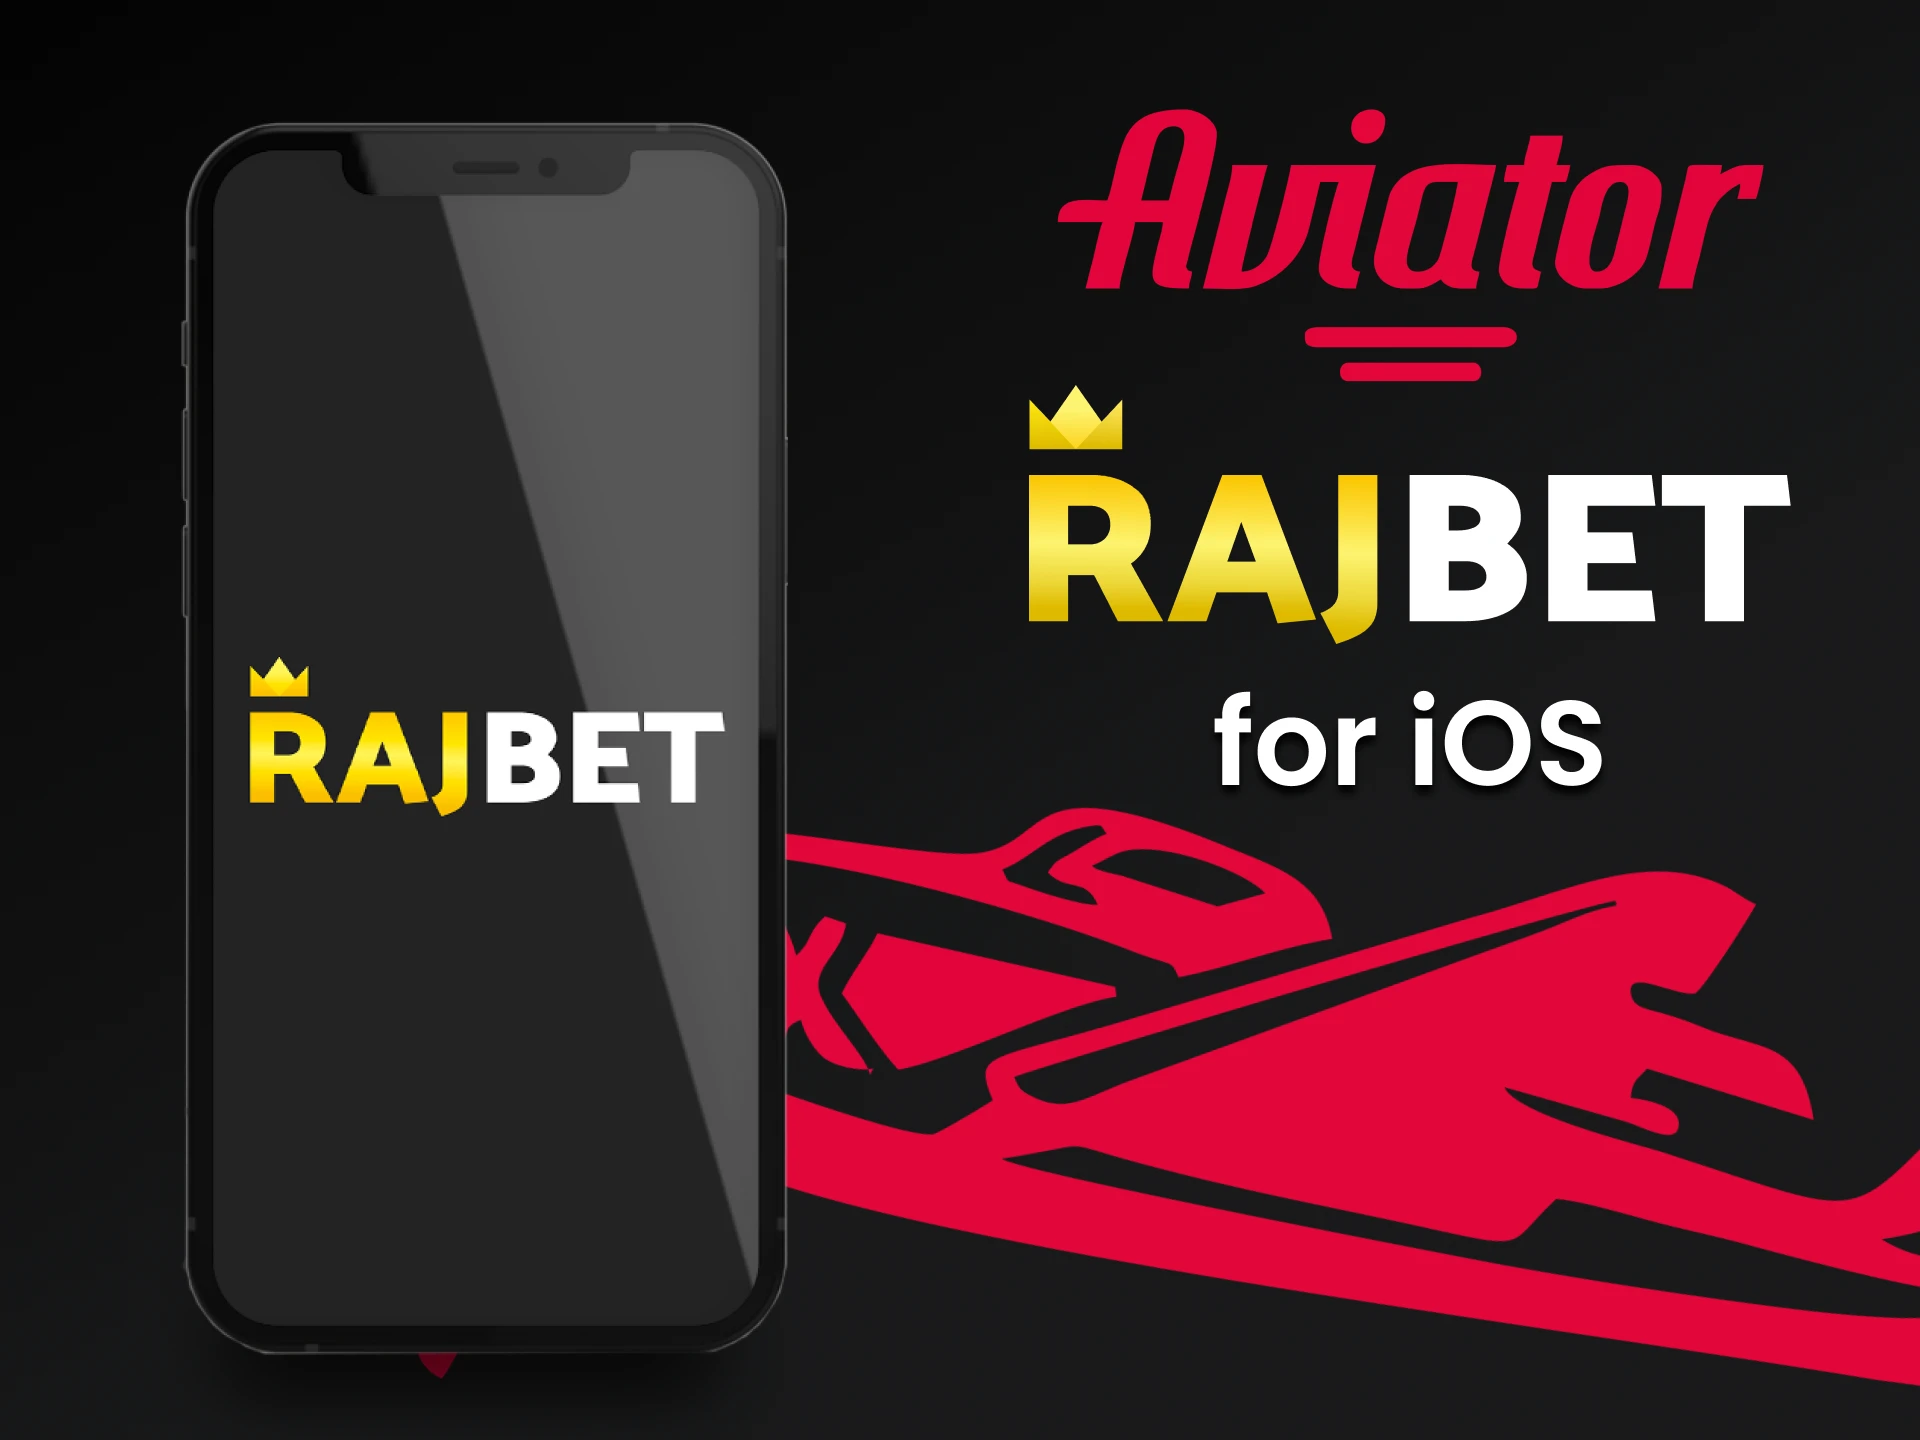 Use o aplicativo Rajbet para Android para jogar Aviator.